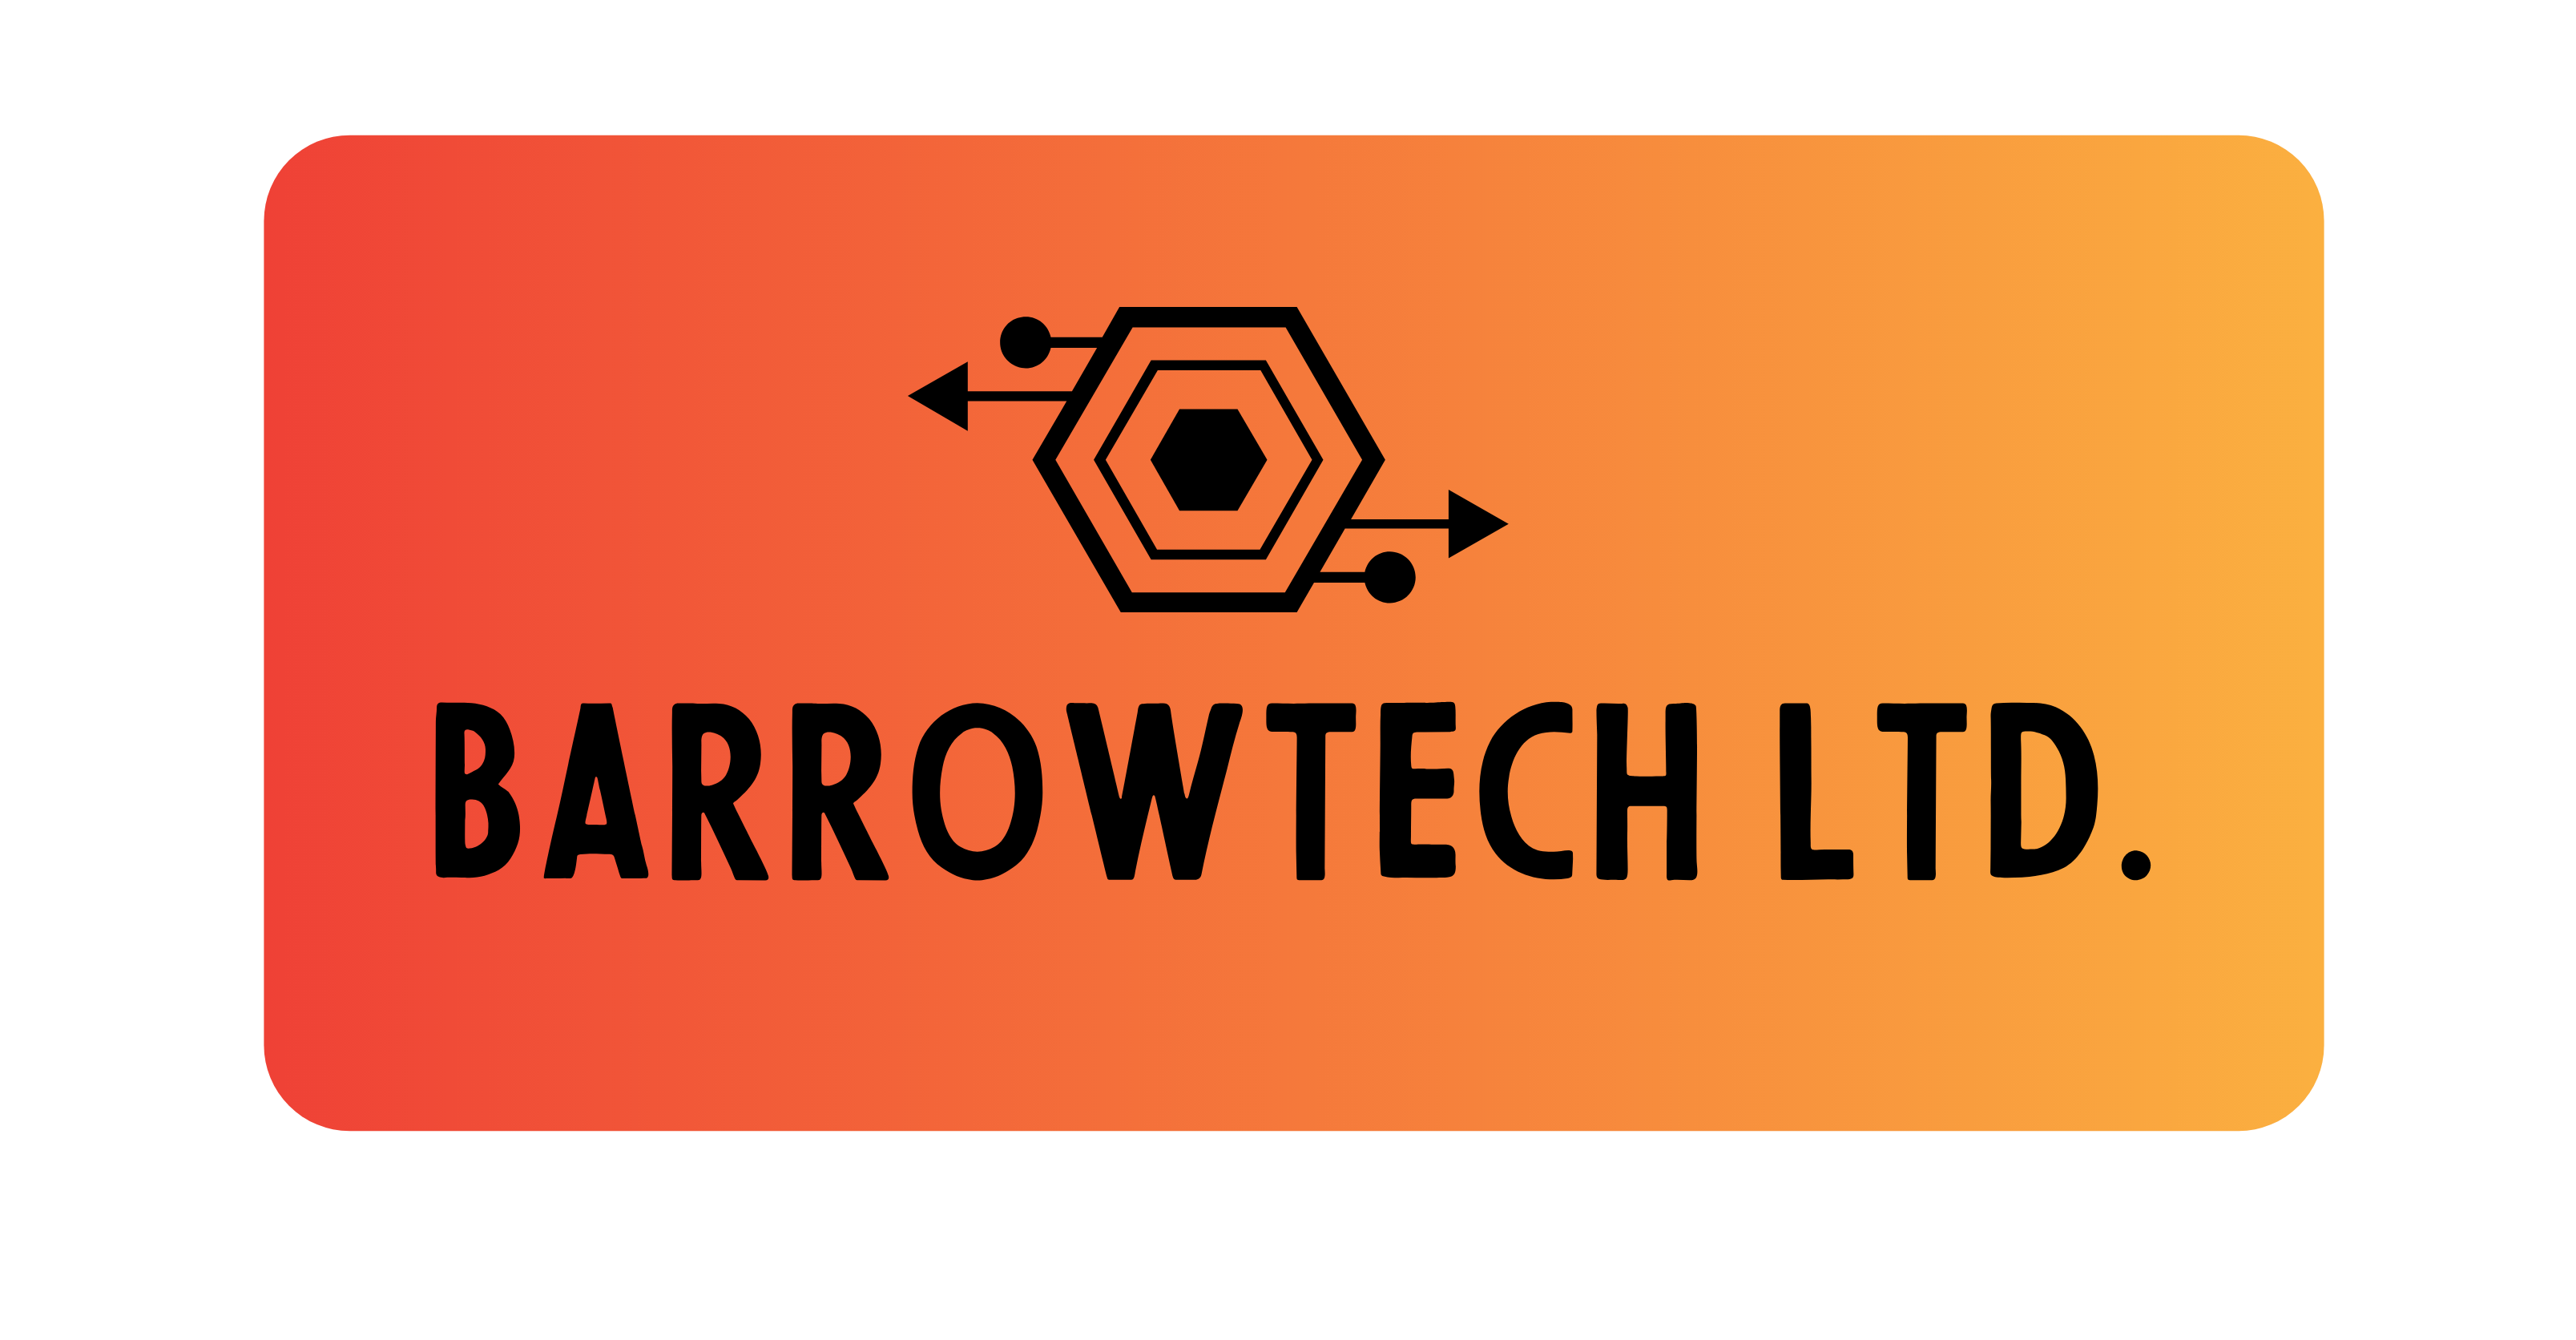 BarrowTech Ltd